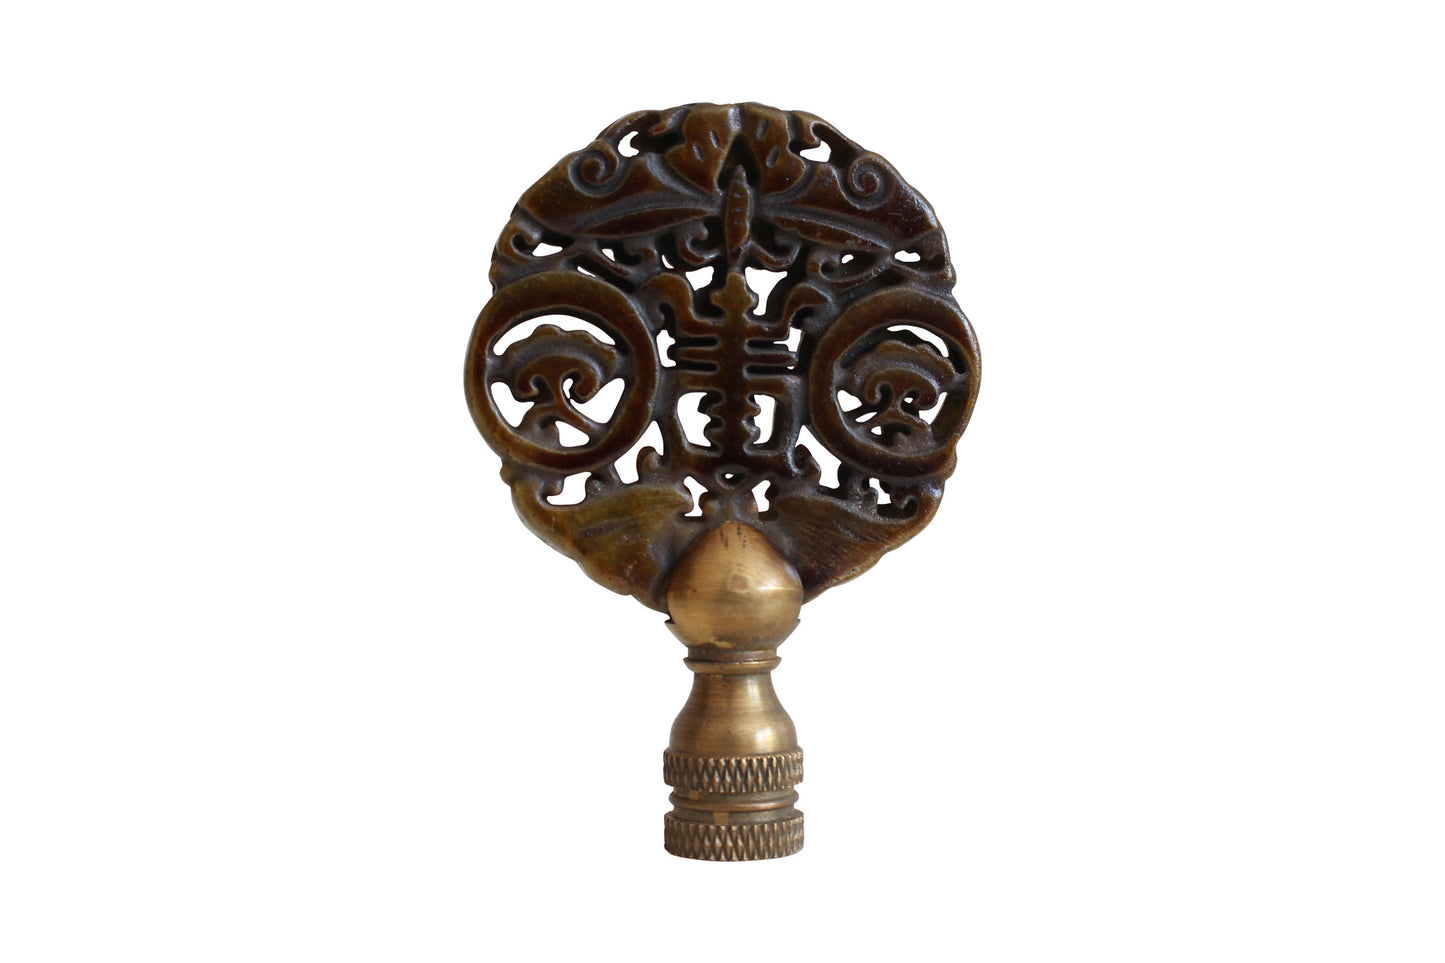 Set of Three Hand Carved Brown Jade Longevity Lamp Finial 3"